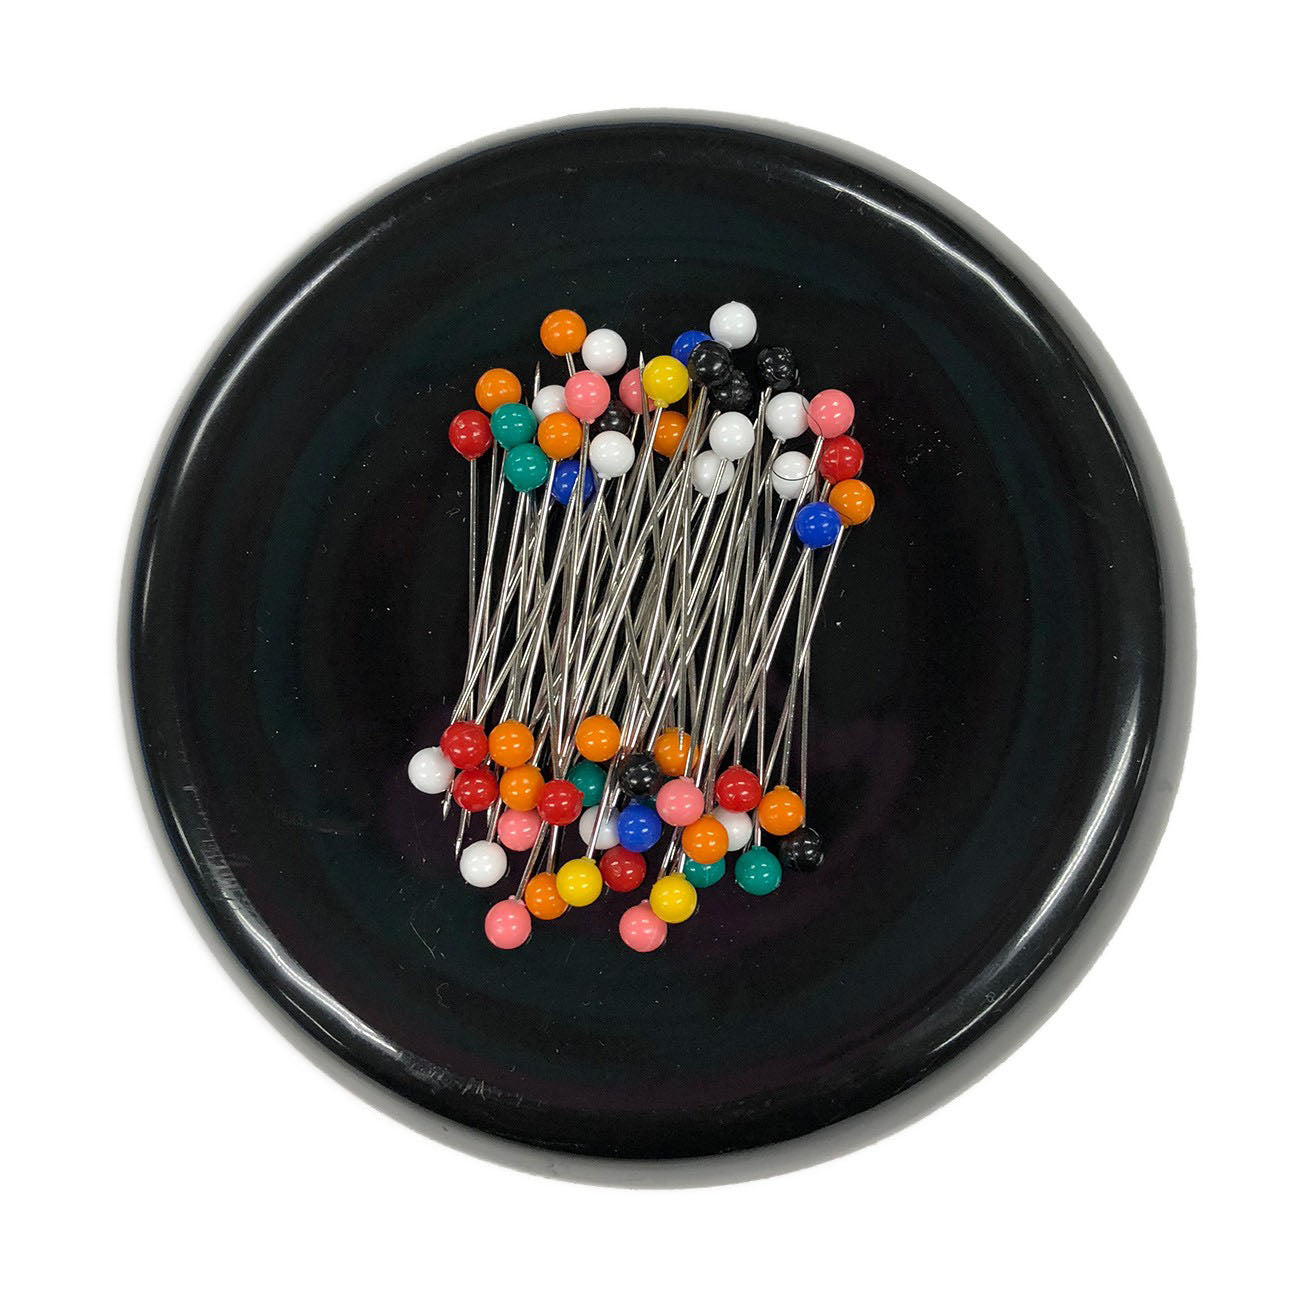 Grabbit Magnetic Pincushion - Black